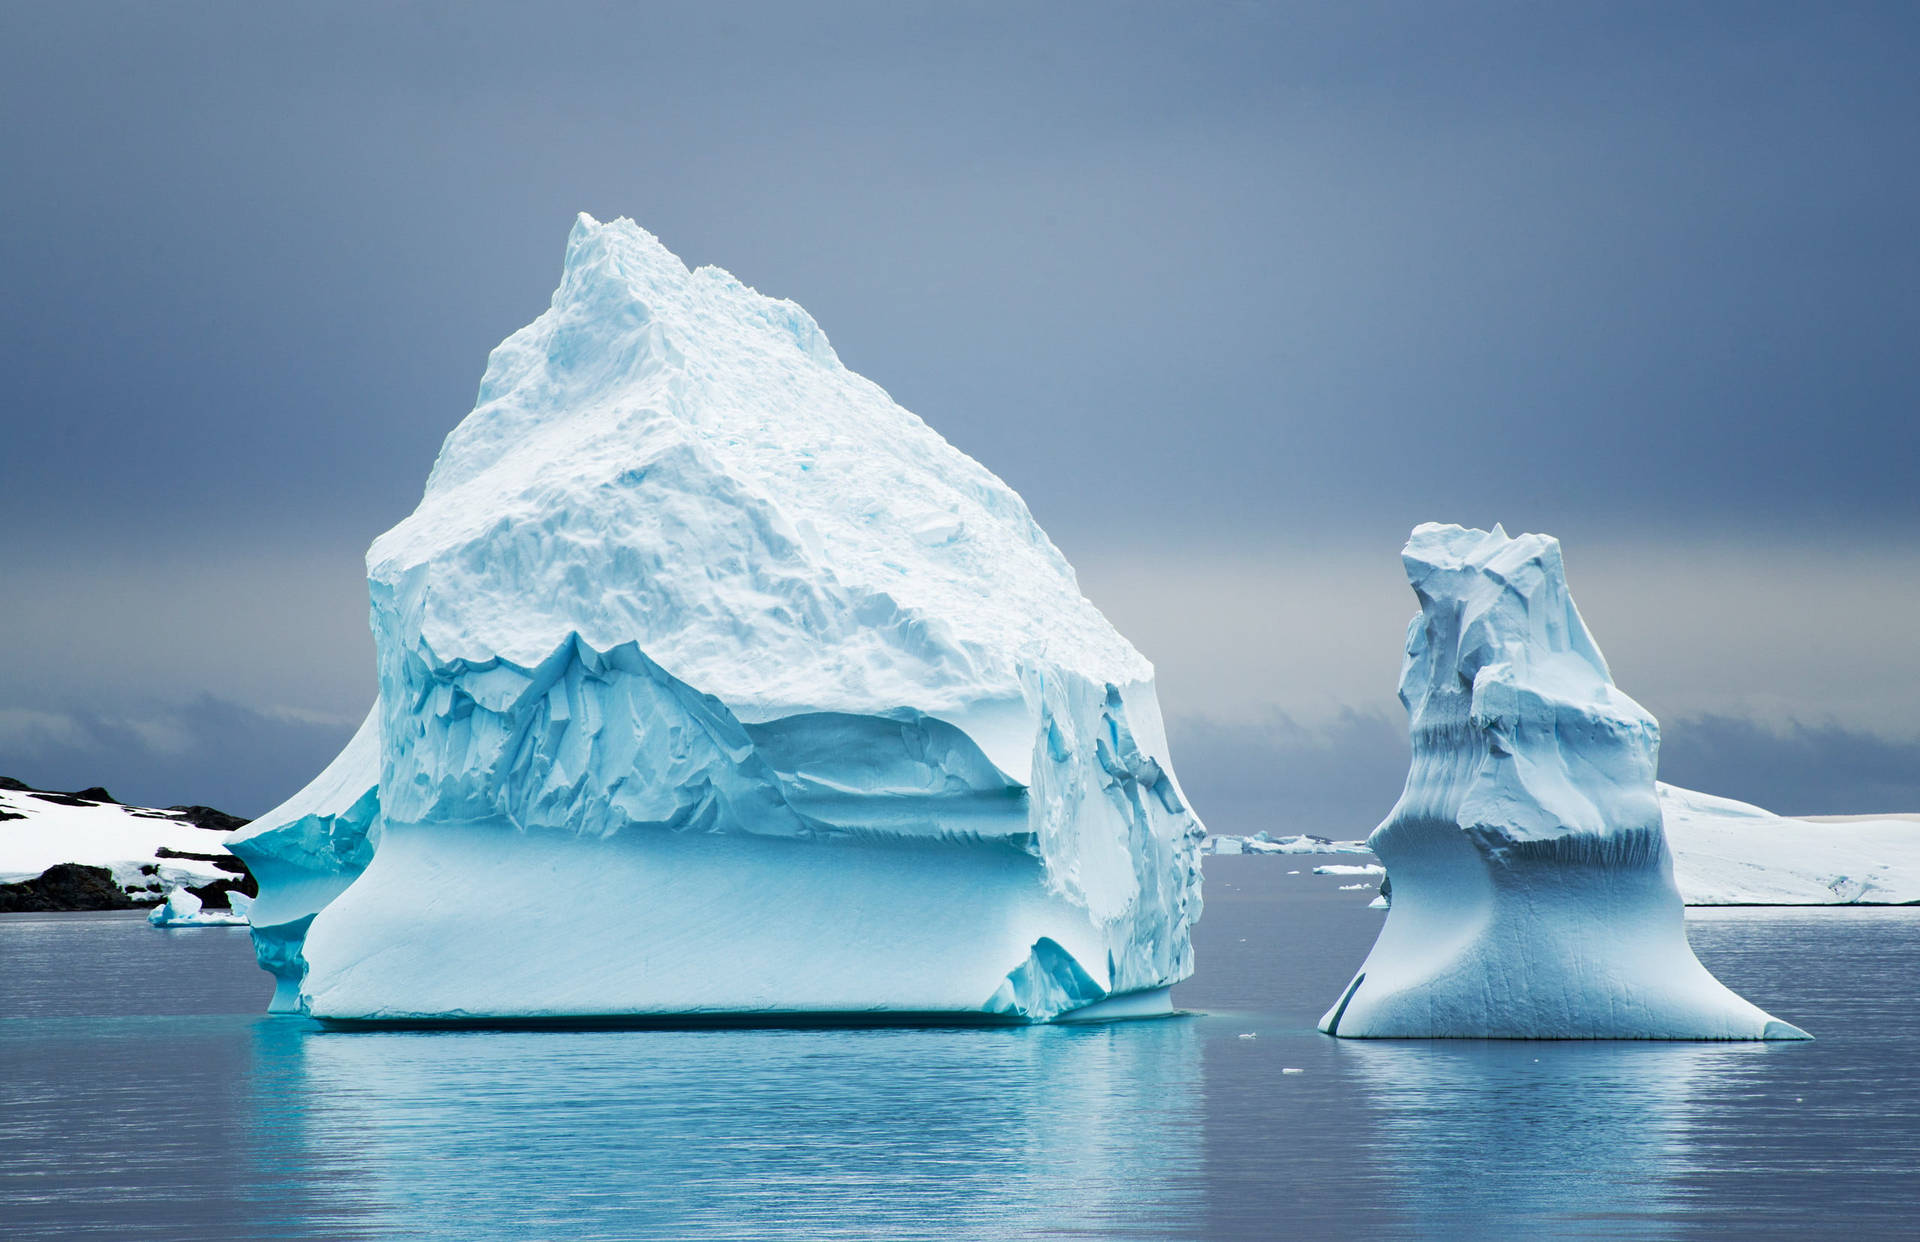 Massive Iceberg With Freezing Temperature Picture